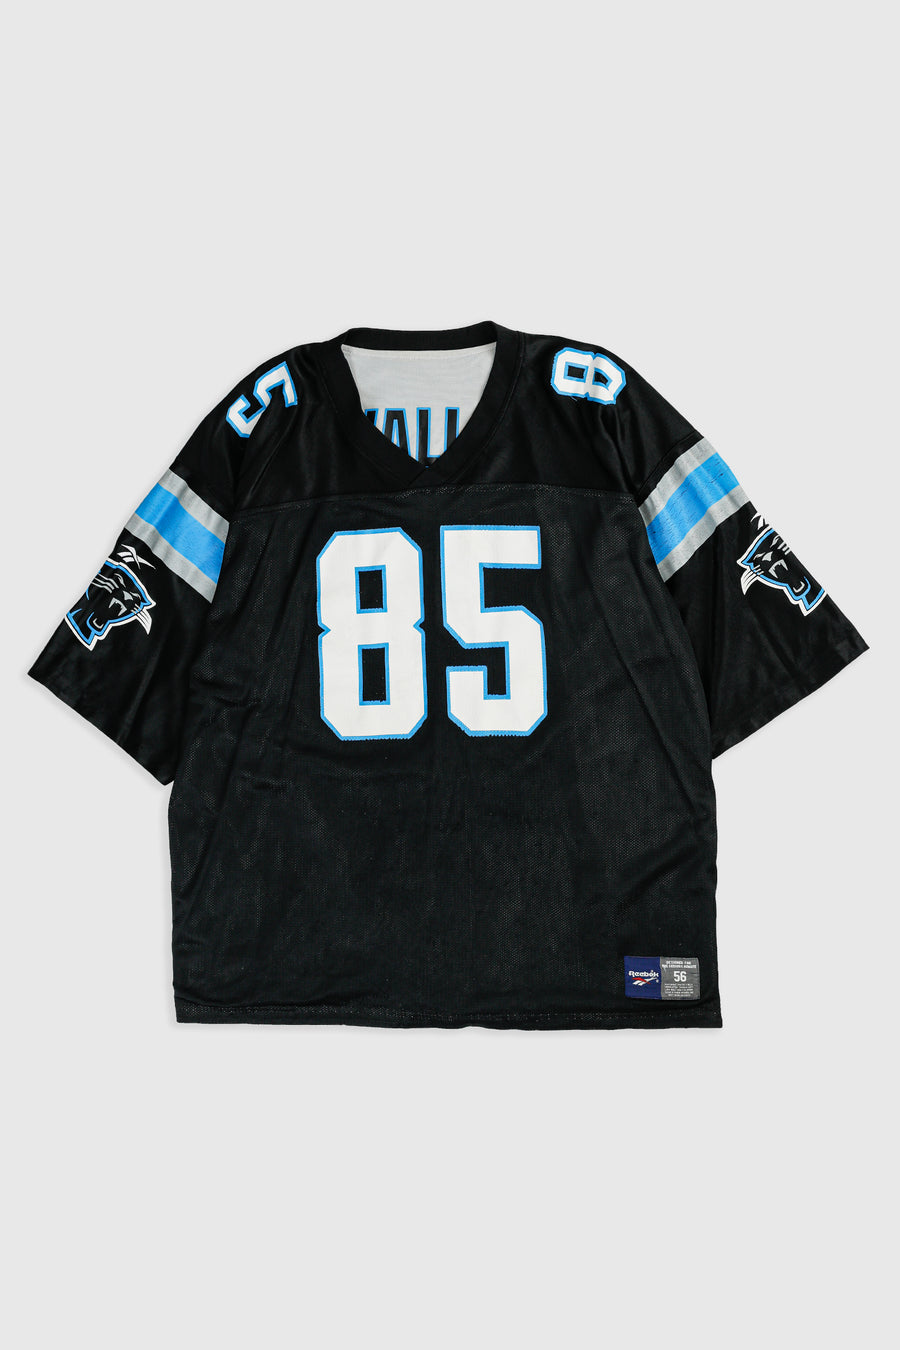 Vintage Carolina Panthers Reversible NFL Jersey - XL